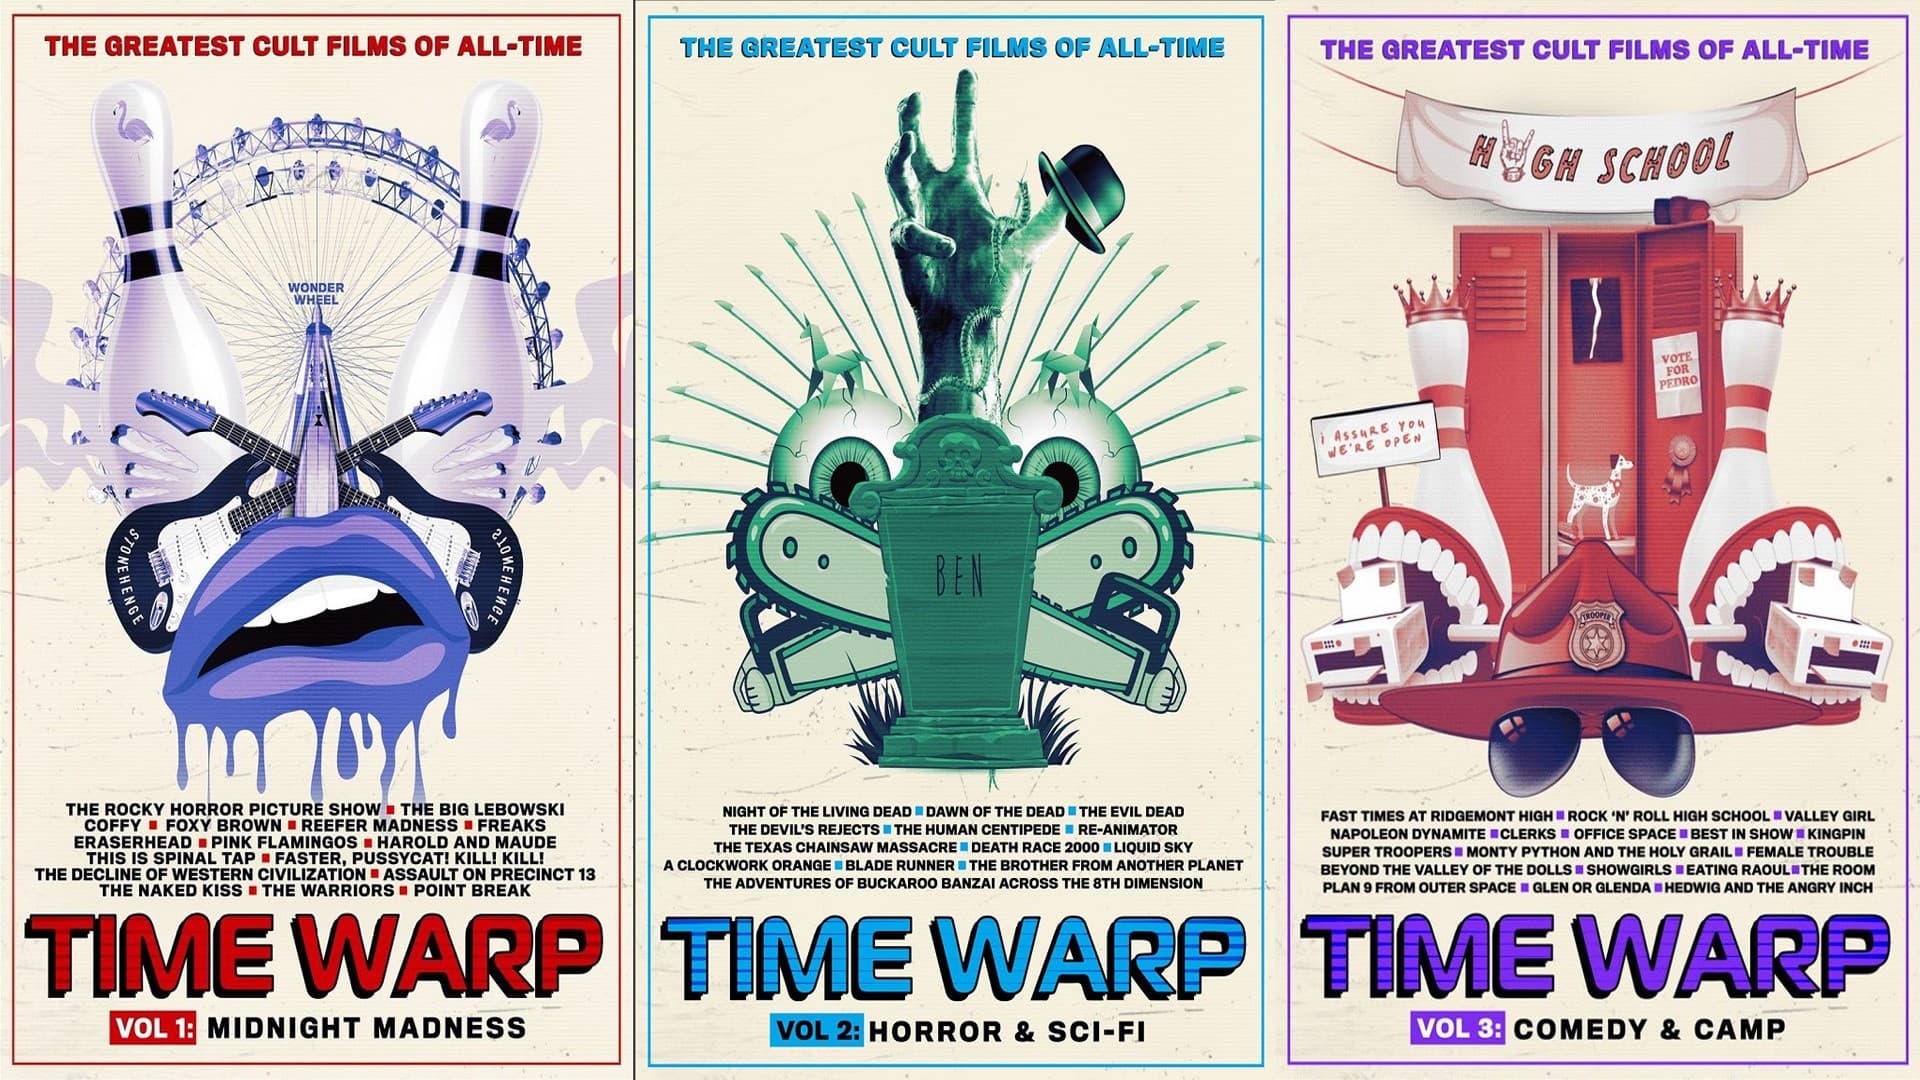 Time Warp Vol. 2: Horror and Sci-Fi